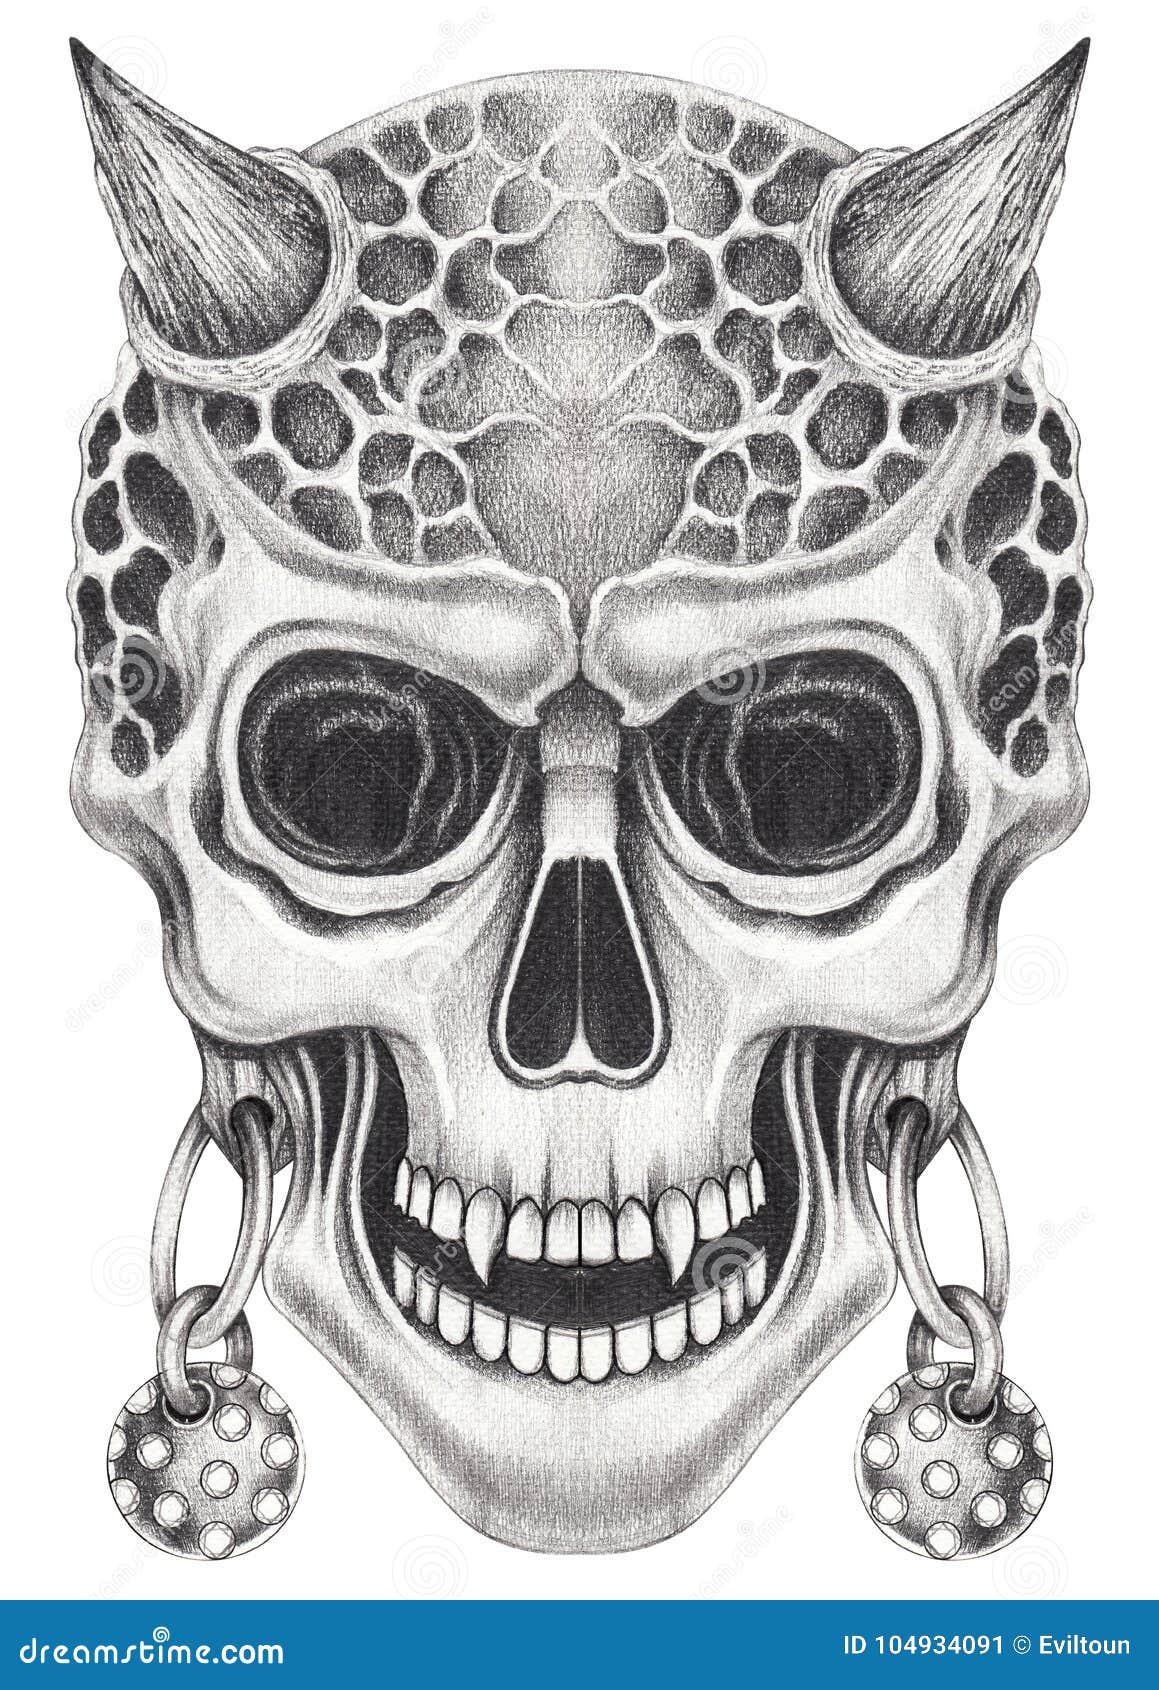 skull sleeve tattoo design by tattoosuzette on DeviantArt